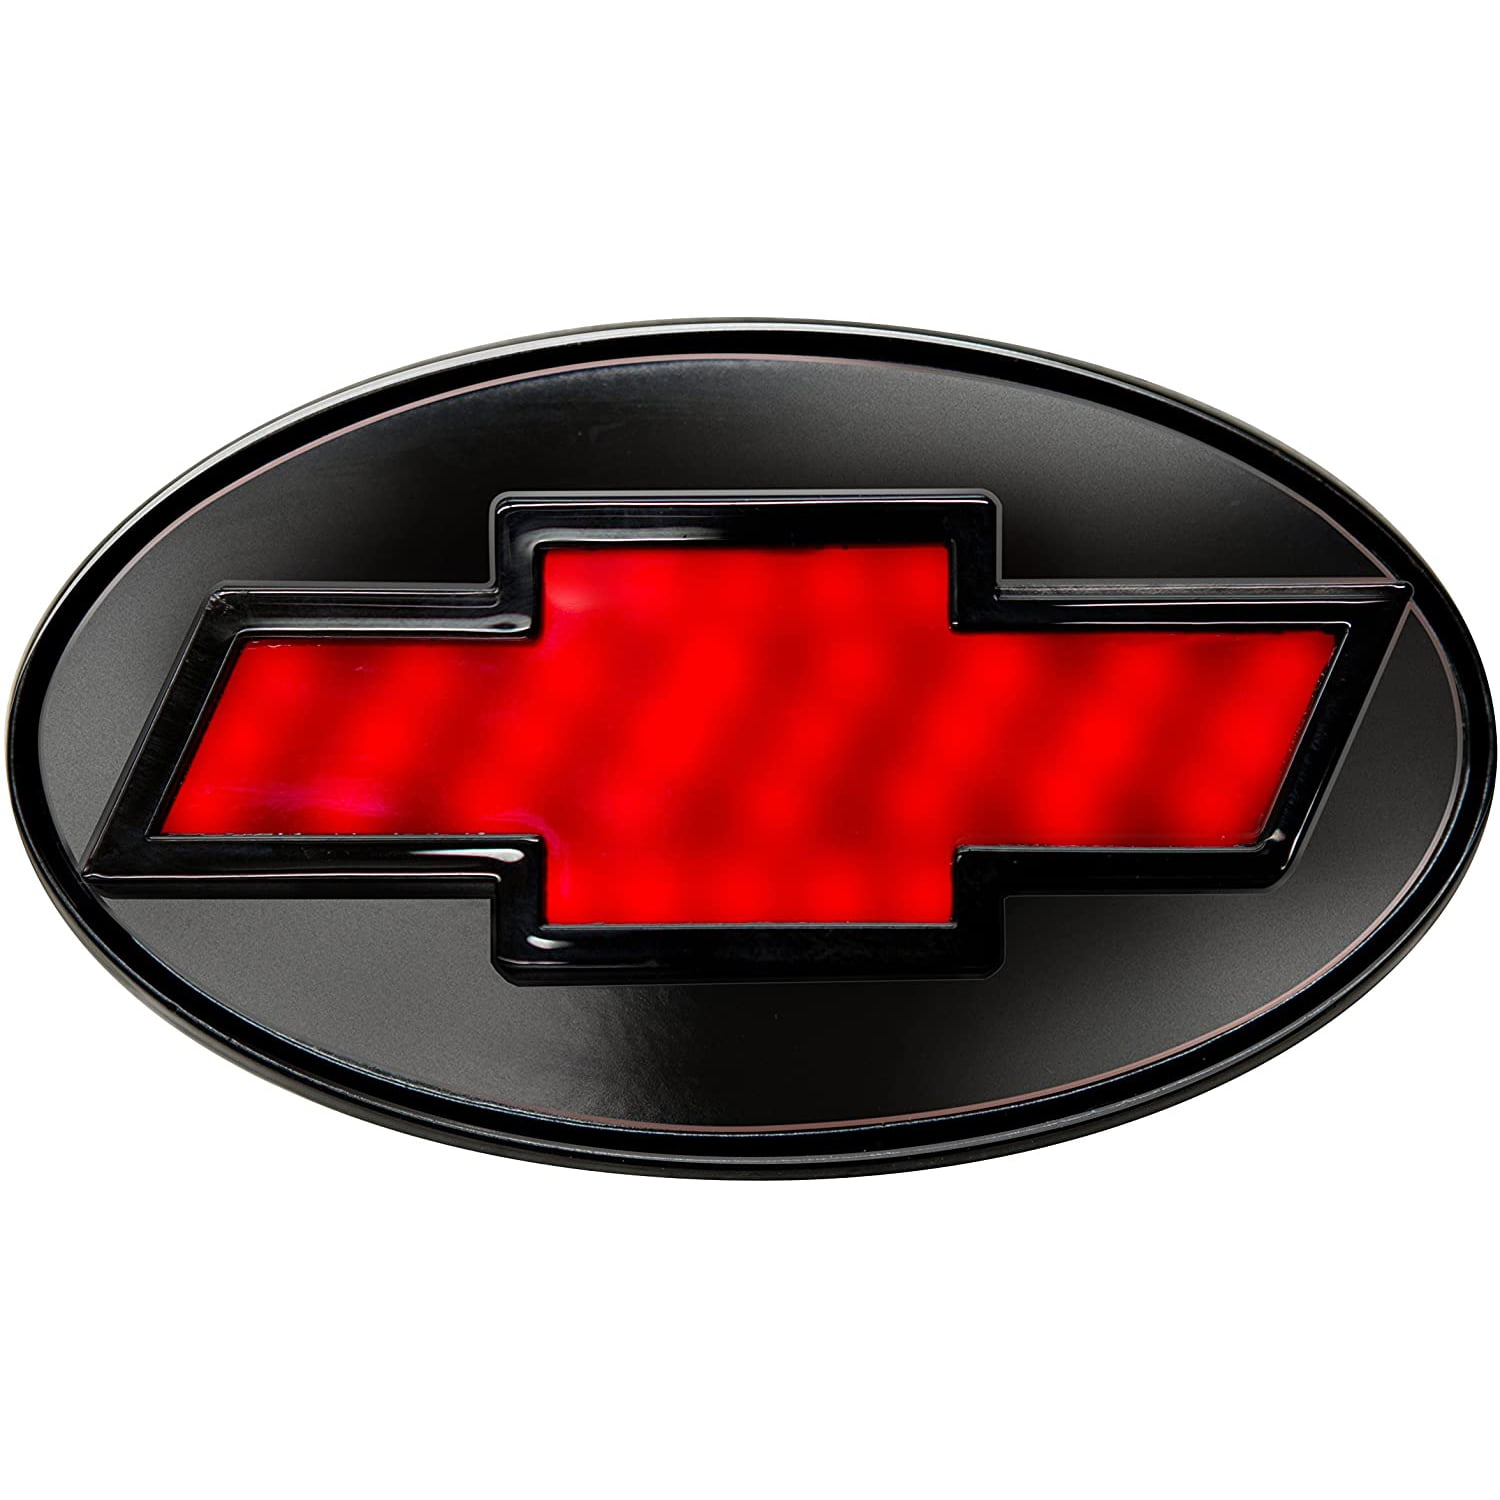 Chevy Emblem Bowtie Trailer Hitch Cover